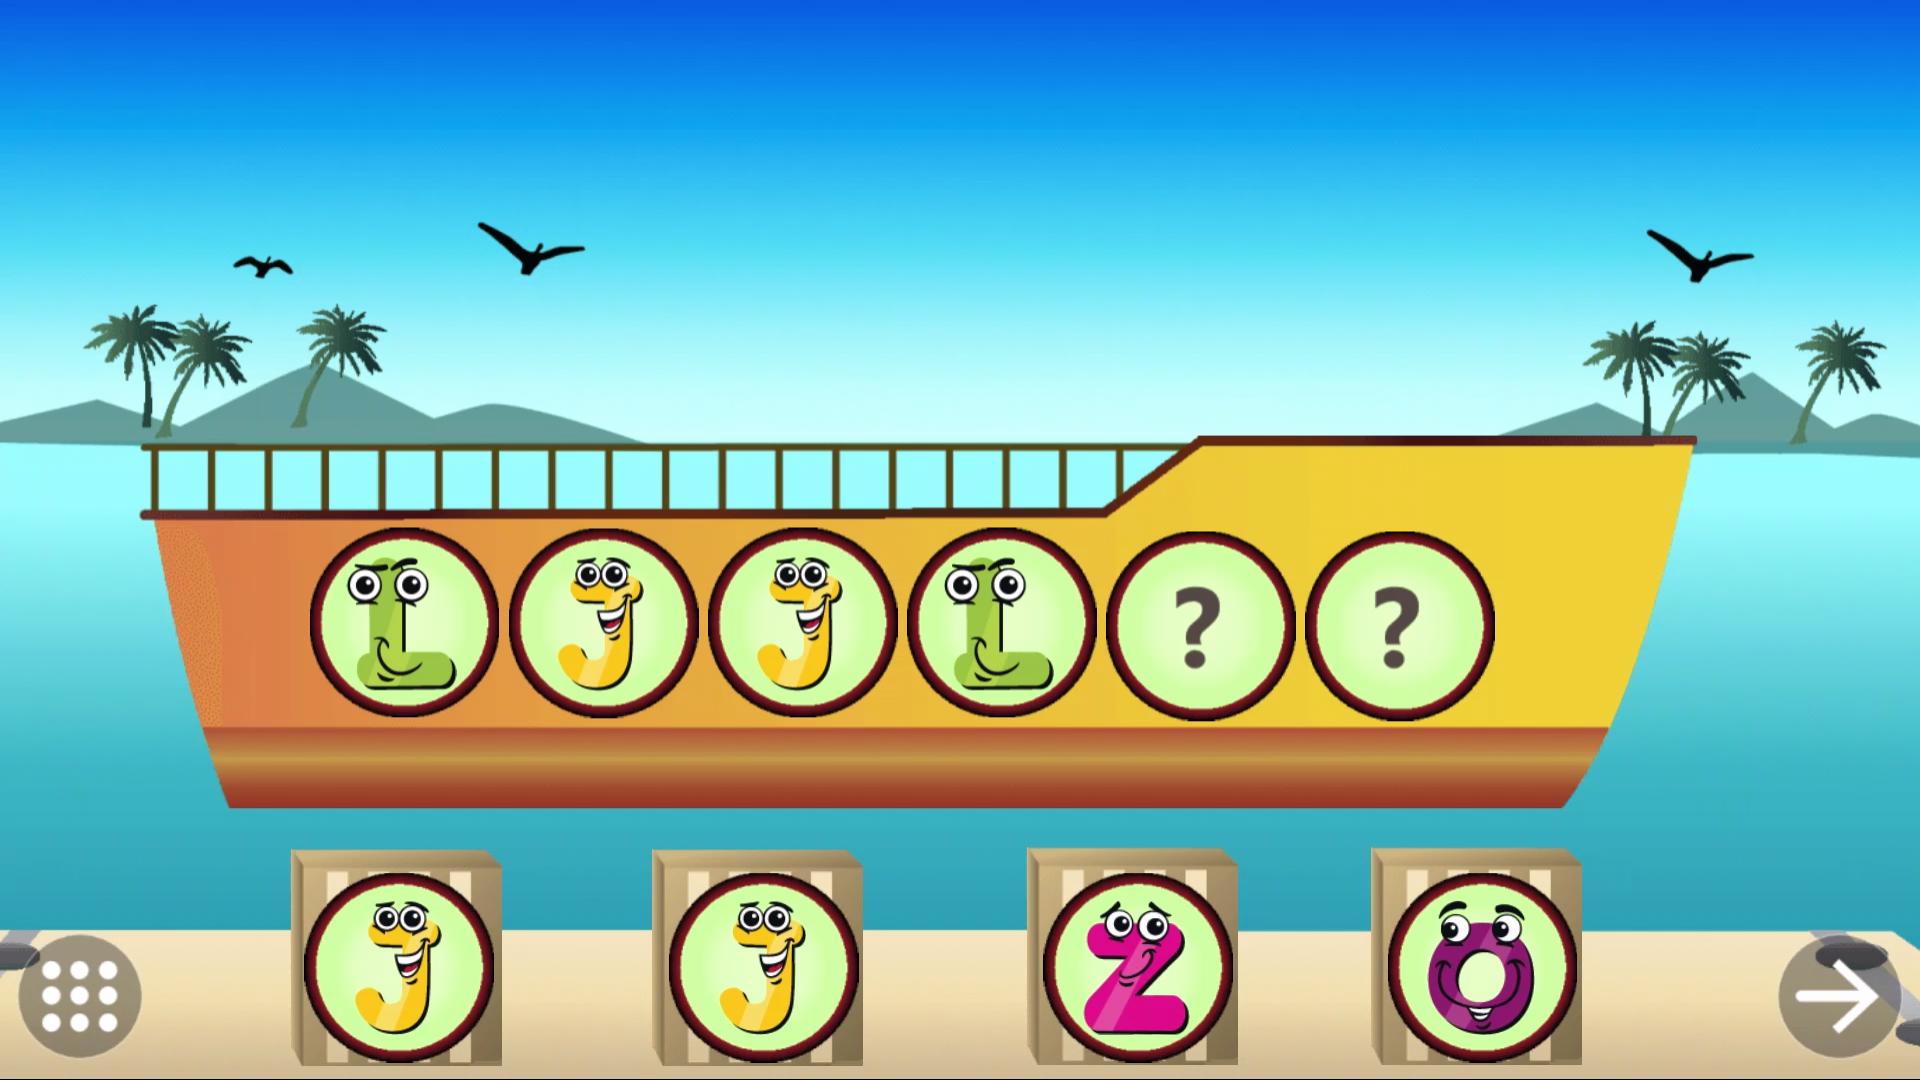 Kids Fun Learning - Educational Cool Math Games 1.0.2.0 Screenshot 21